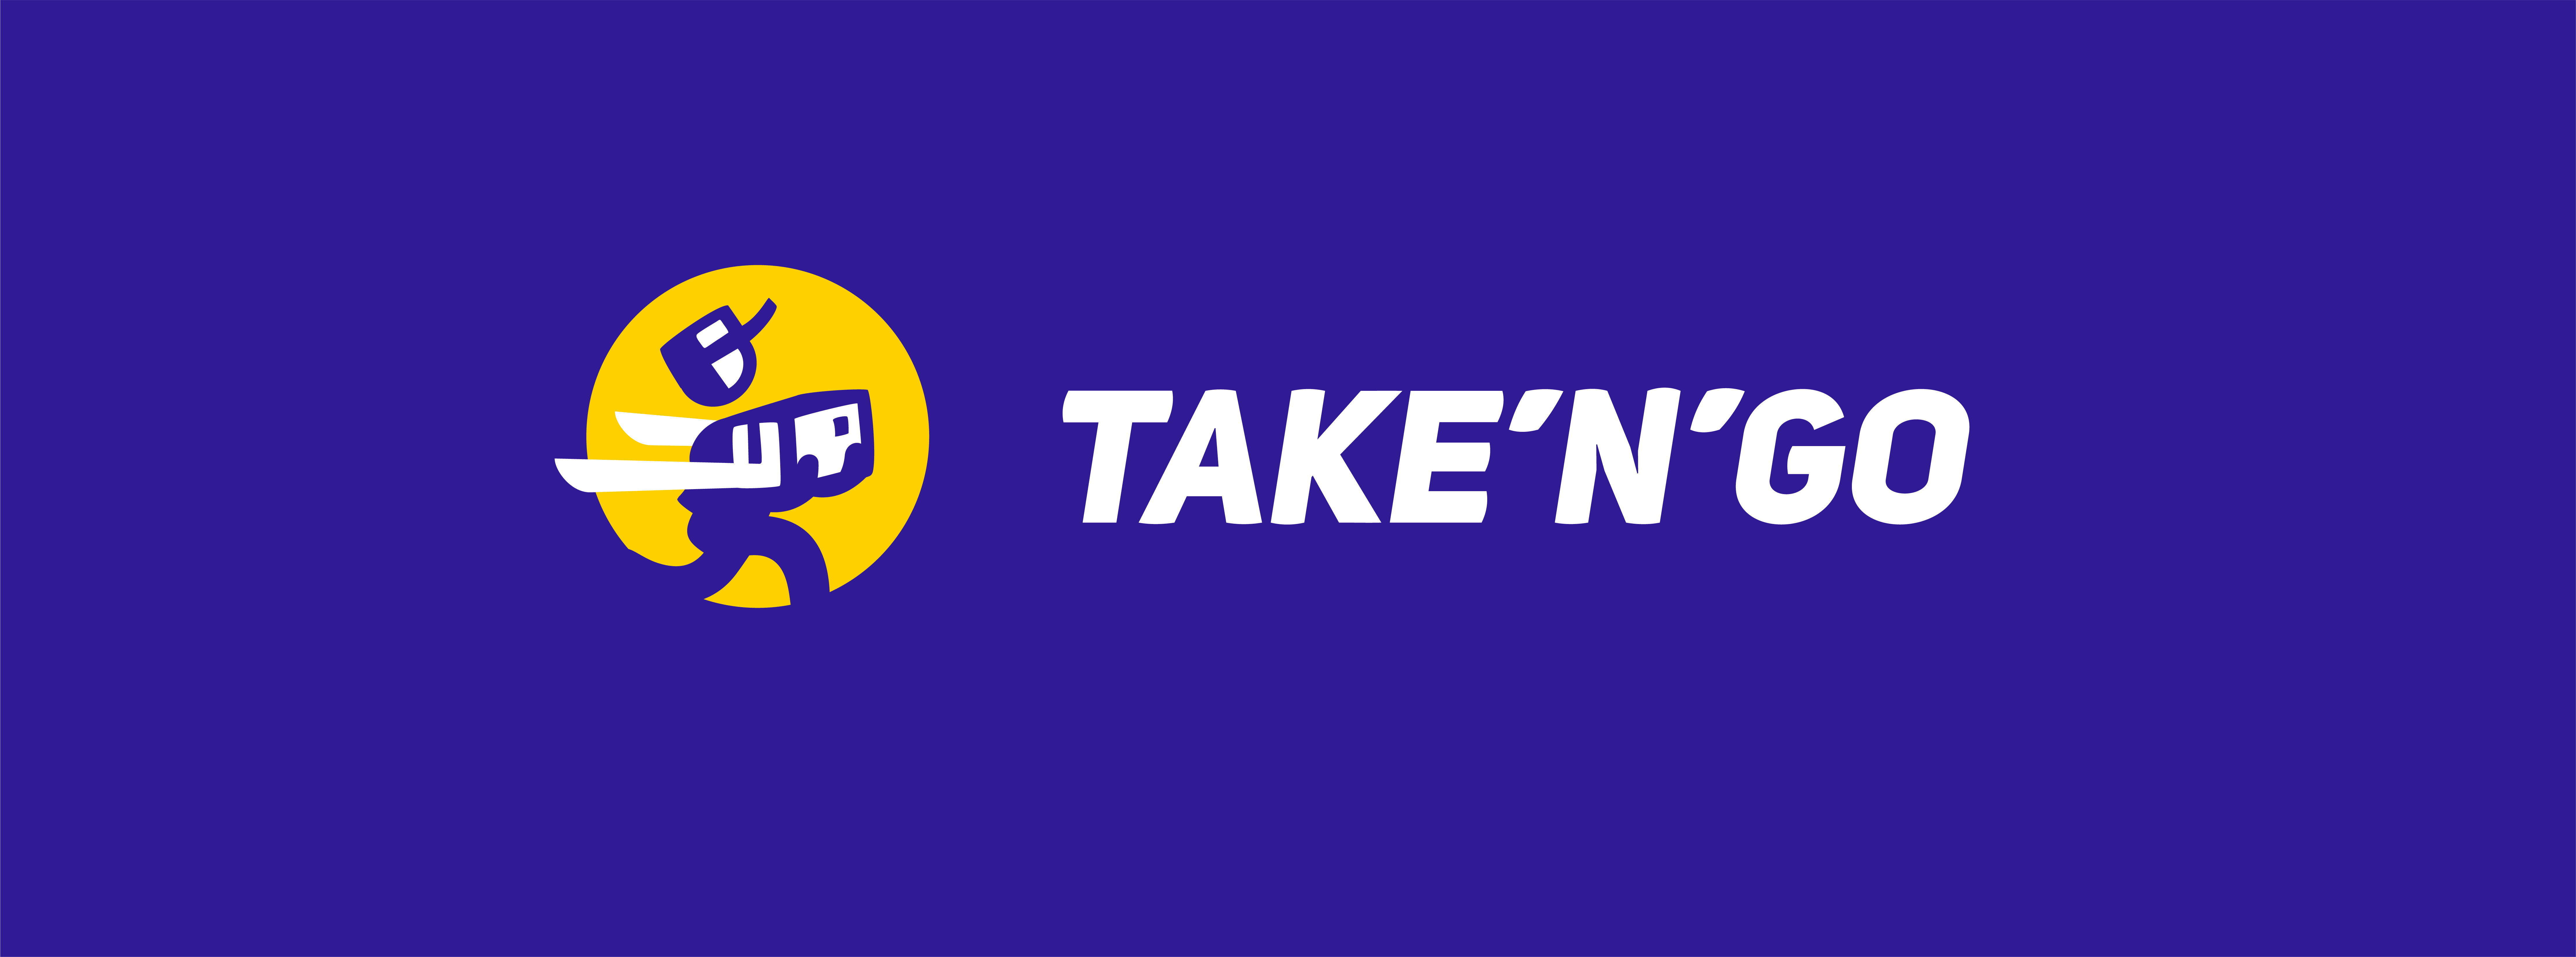 Take my go. Take’n’go курьеры. Taken go Курьерская служба. Kuugo логотип. Take’n’go лого PNG.